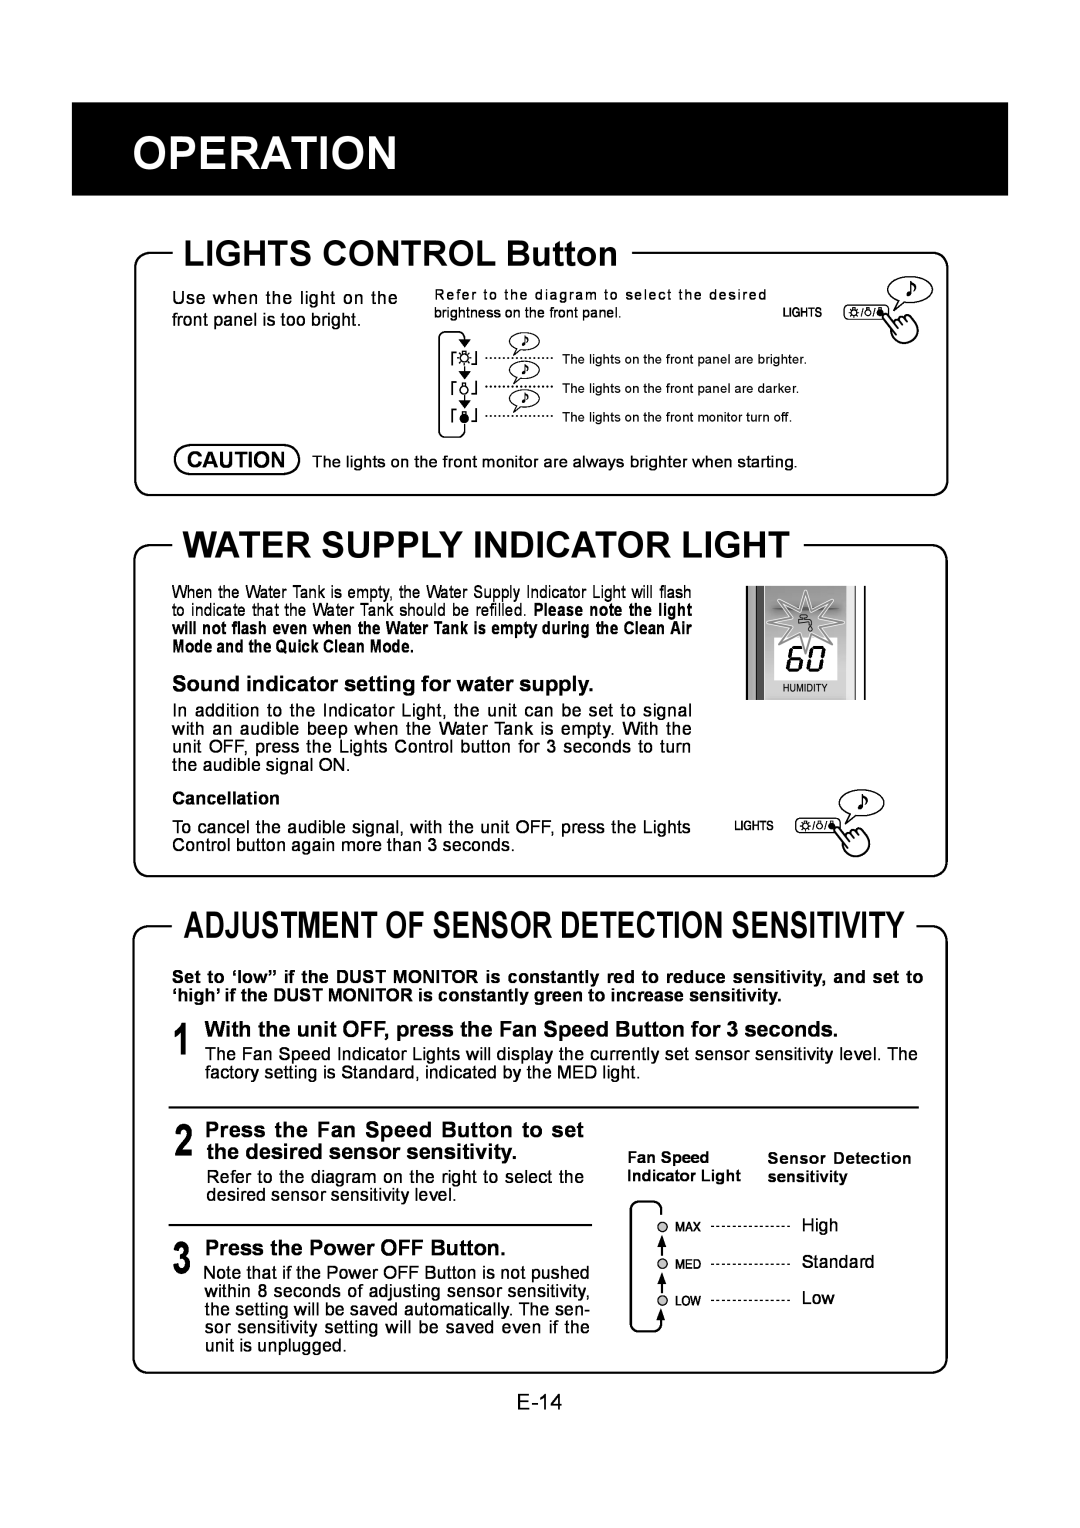 Sharp KC-860U Water Supply Indicator Light, LIGHTS CONTROL Button, Adjustment Of Sensor Detection Sensitivity, E-14 